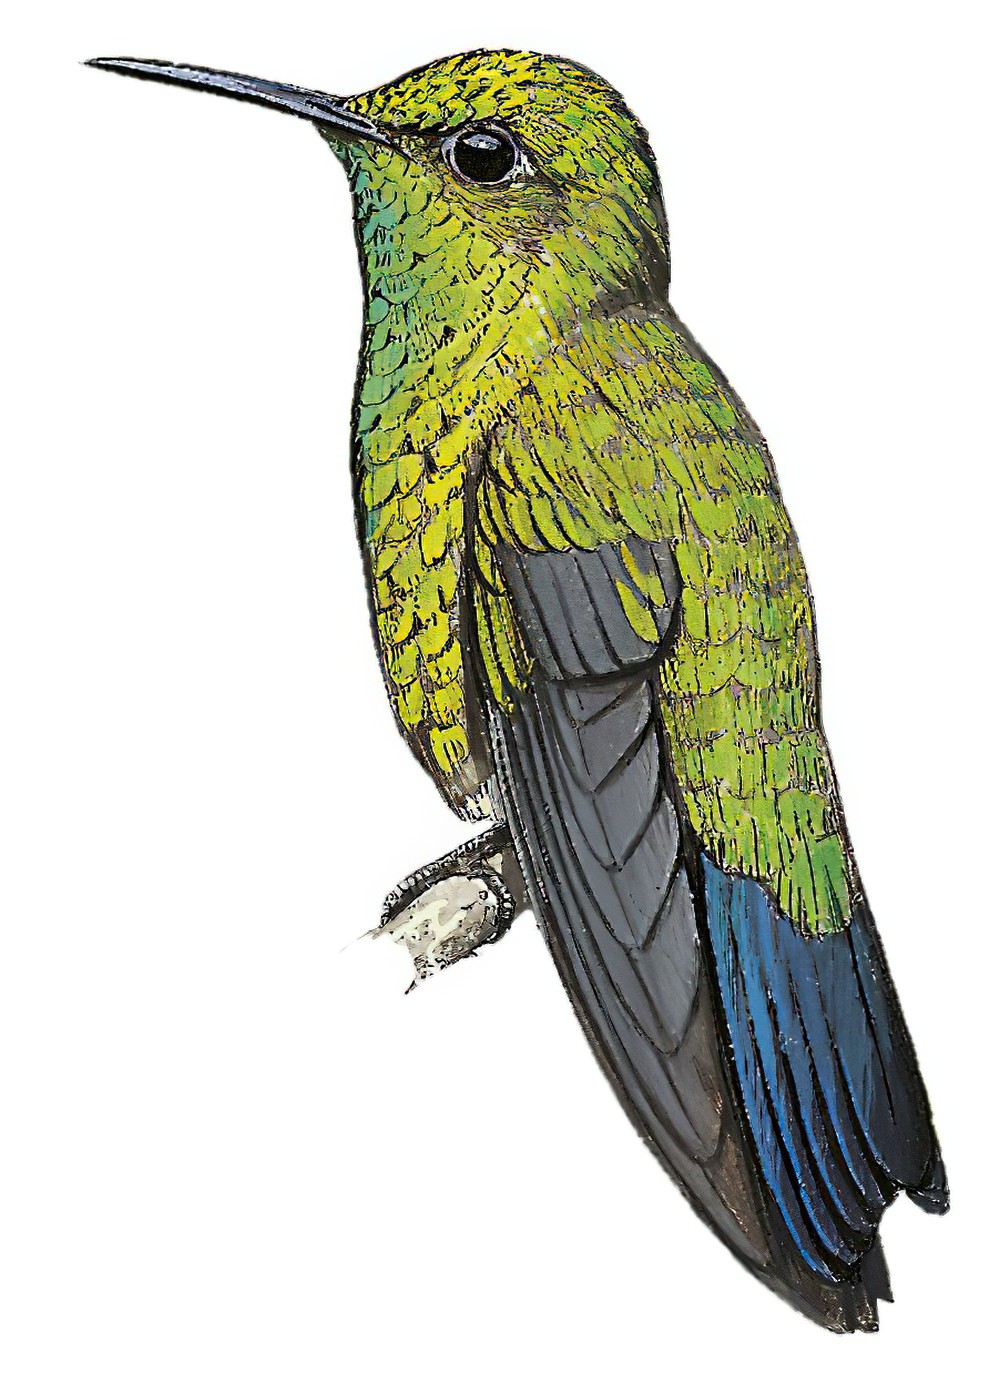 Western Emerald / Chlorostilbon melanorhynchus